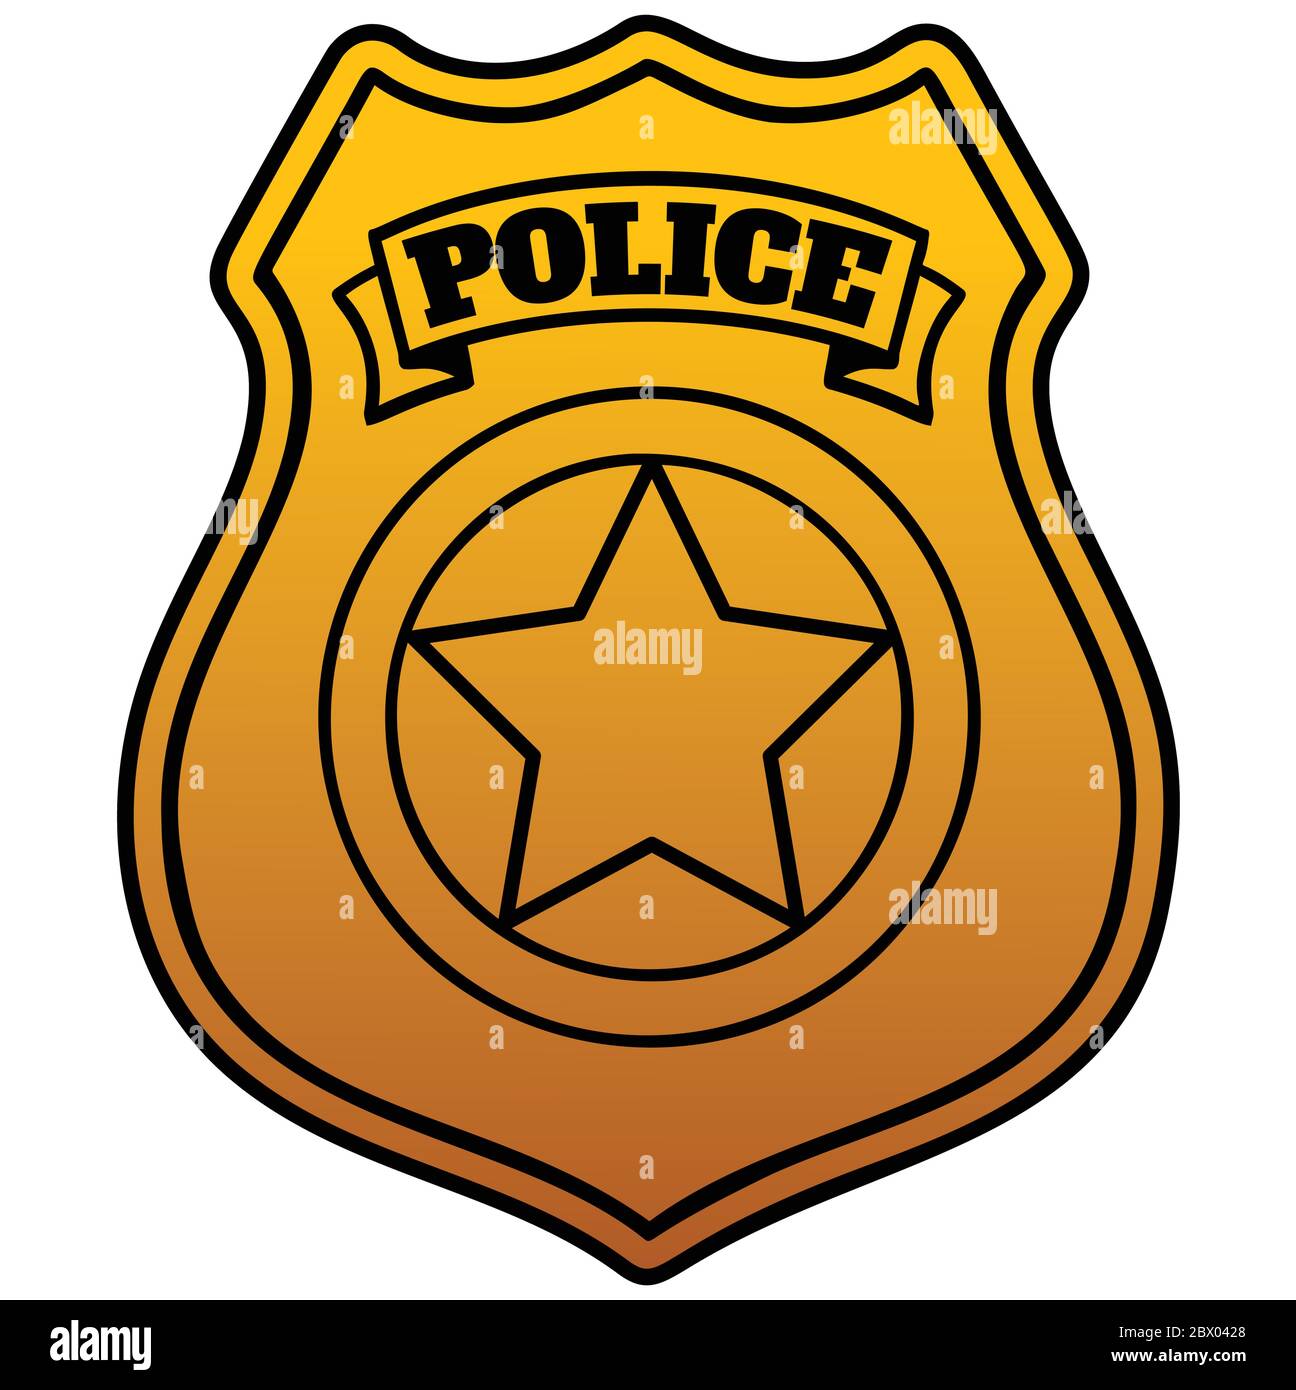 https://c8.alamy.com/compfr/2bx0428/insigne-de-police-illustration-d-un-insigne-de-police-2bx0428.jpg